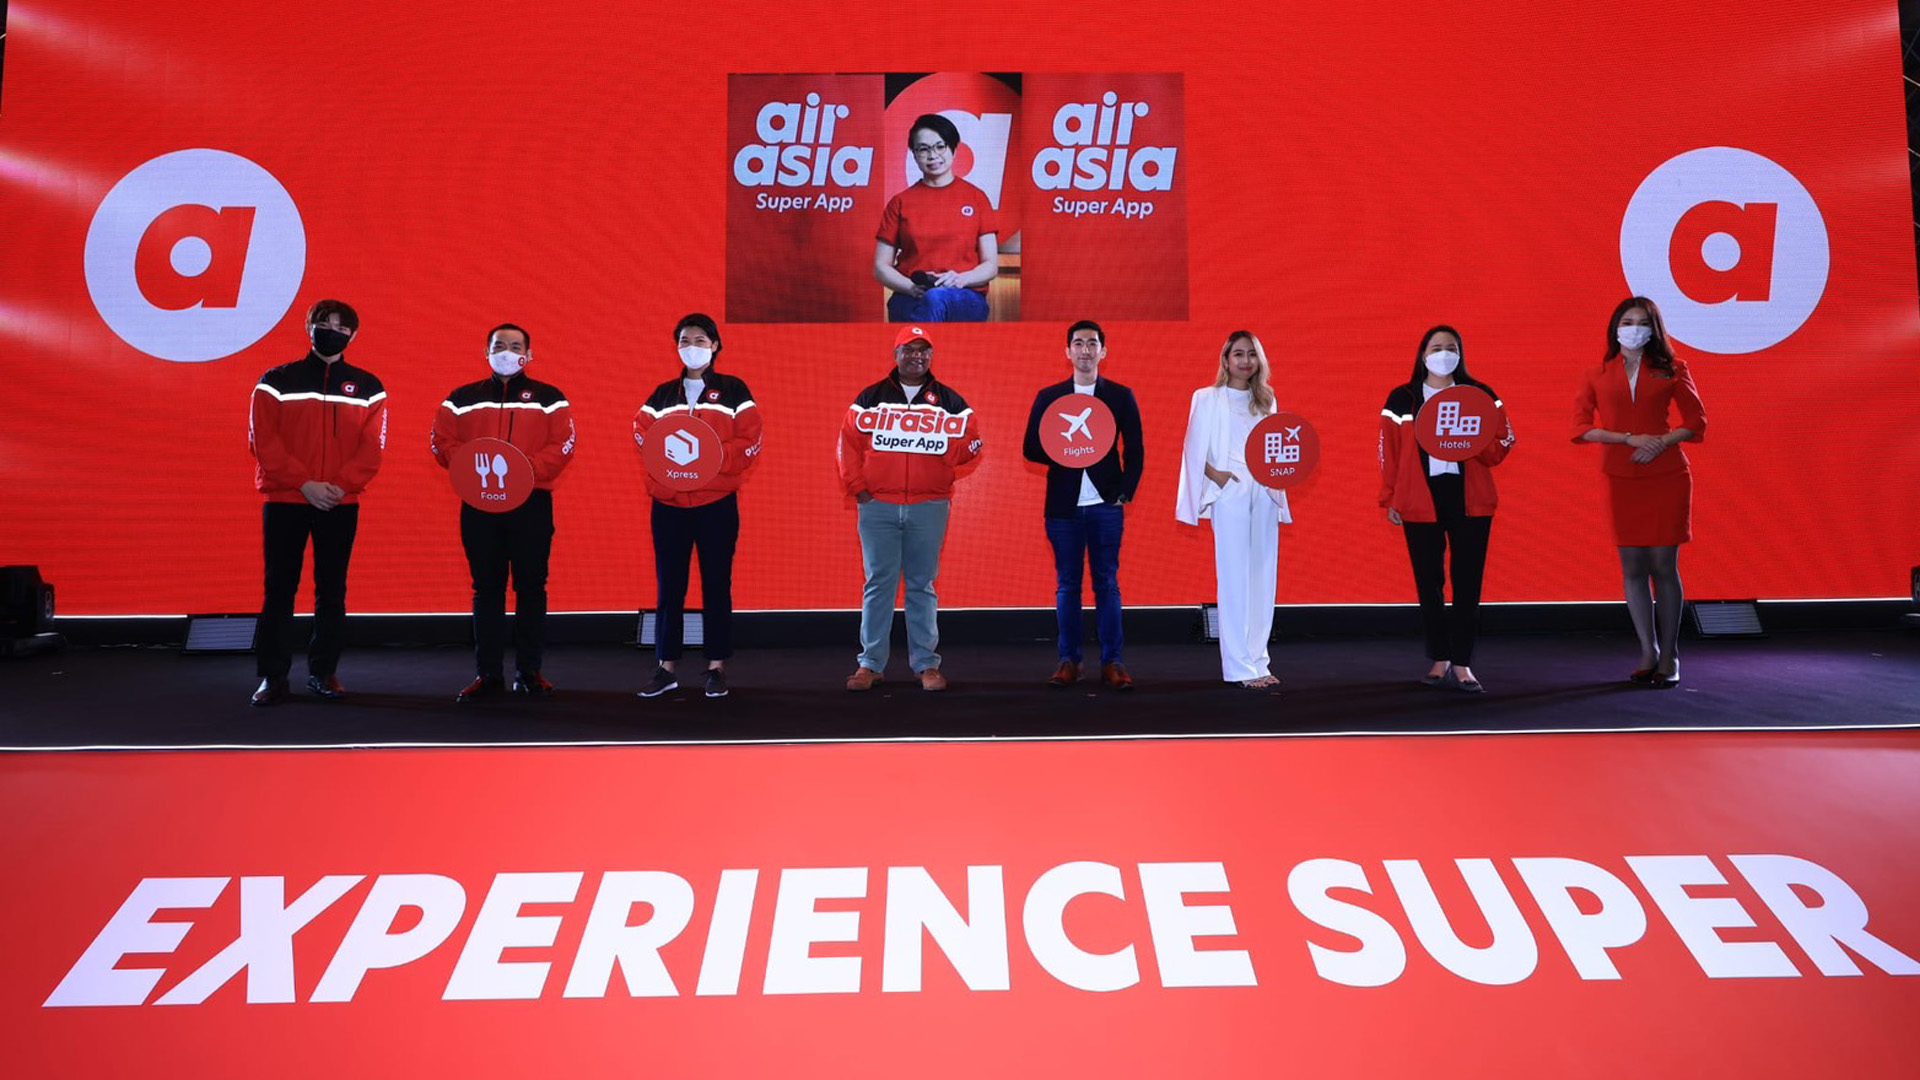 airasia Super App ตั้งเป้าเป็นสุดยอดแอปอาเซียน ภายในปี 2569 ด้วยทุกบริการที่ครอบคลุม